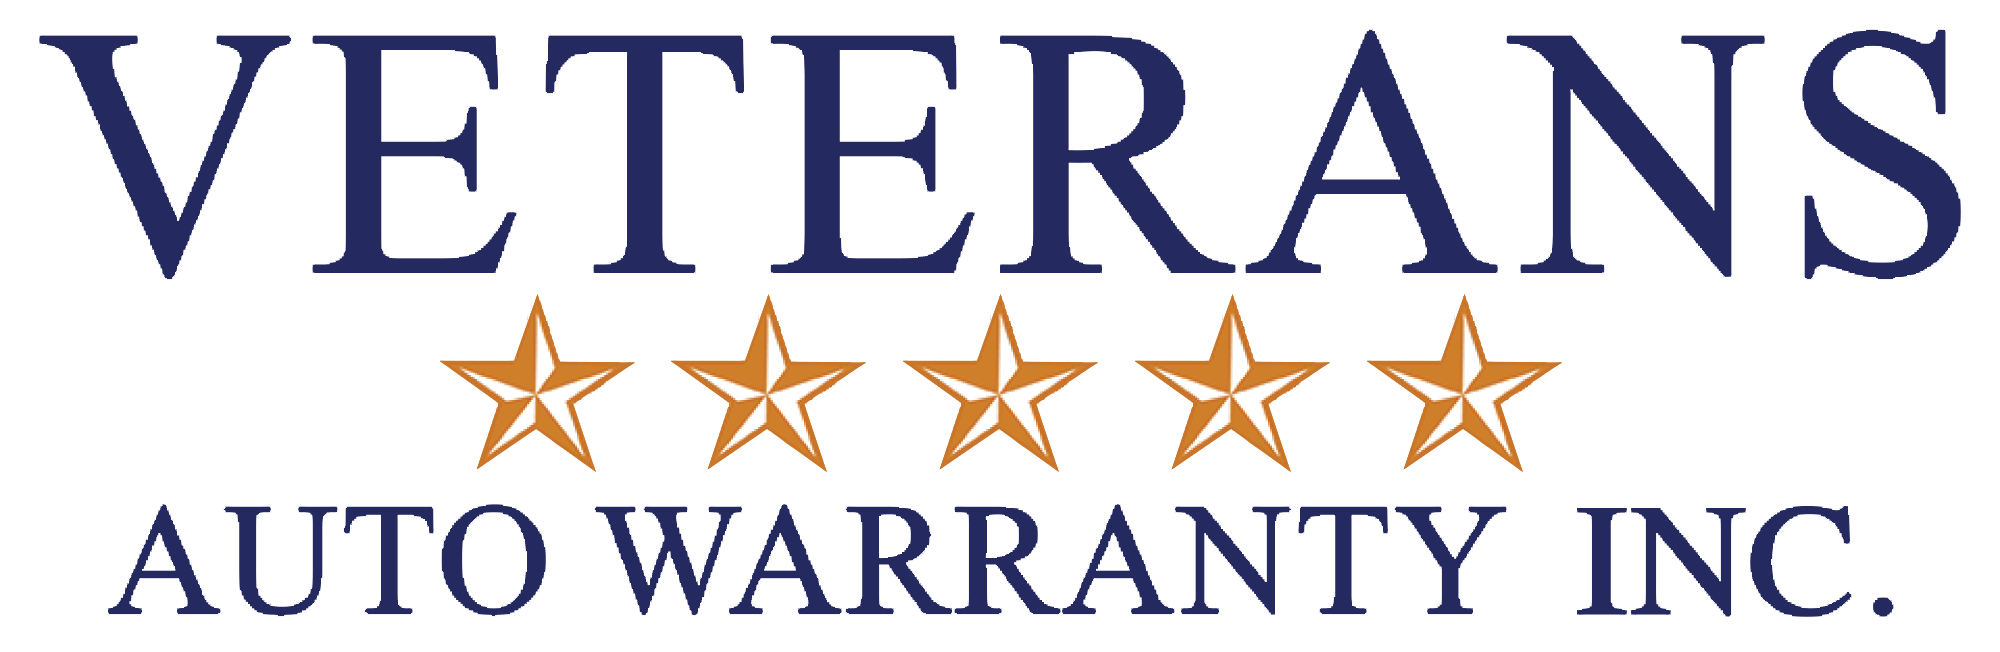 Veterans Auto Warranty Logo